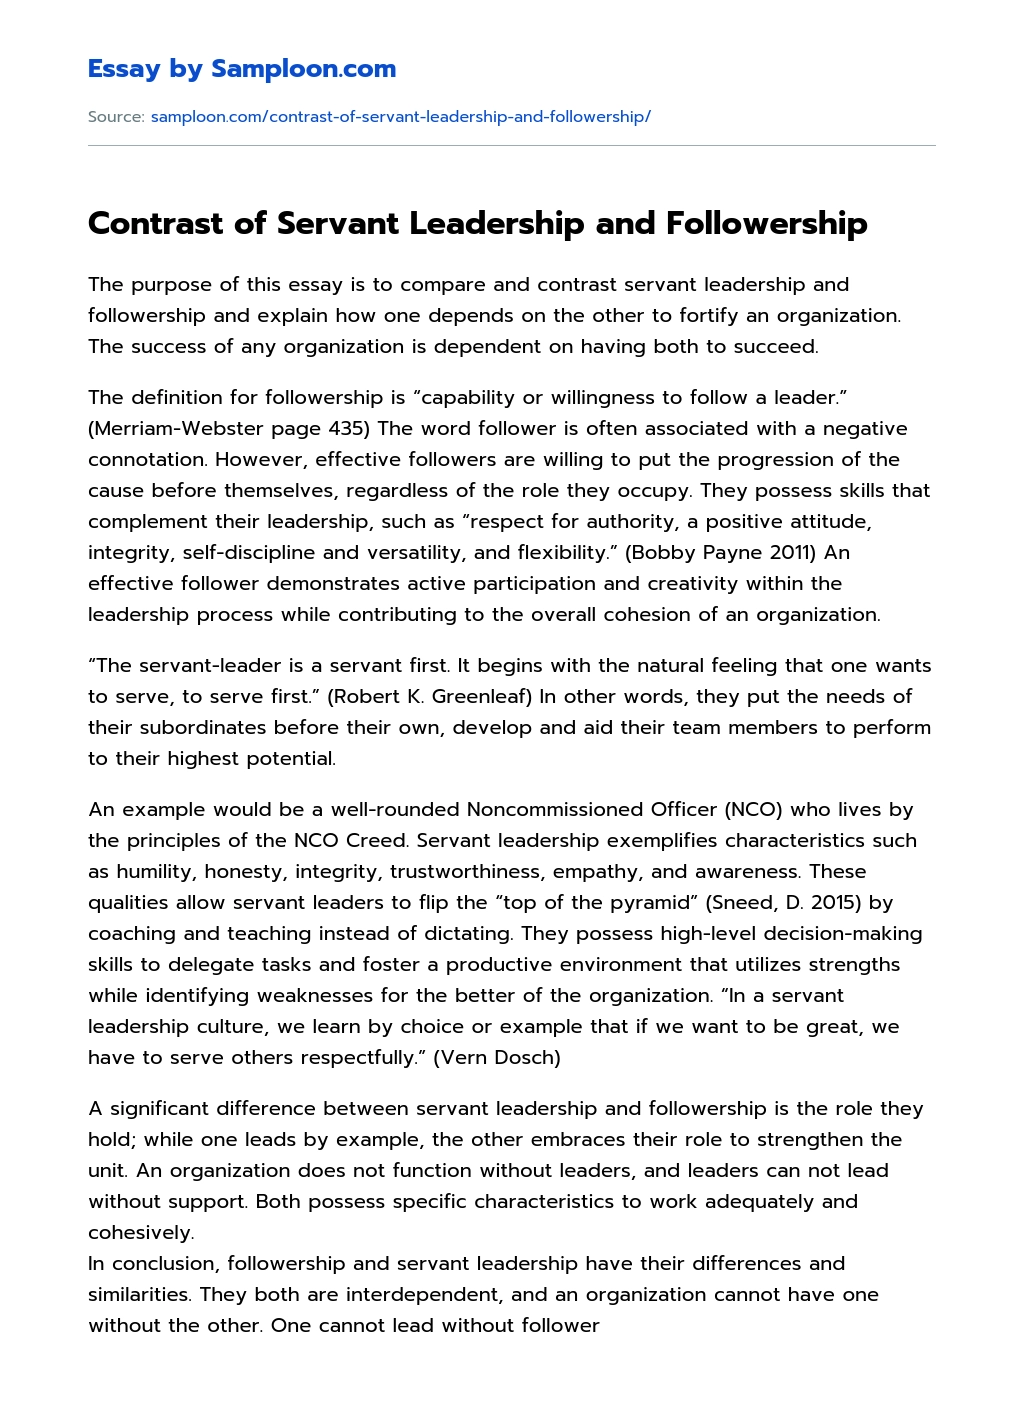 Contrast of Servant Leadership and Followership essay